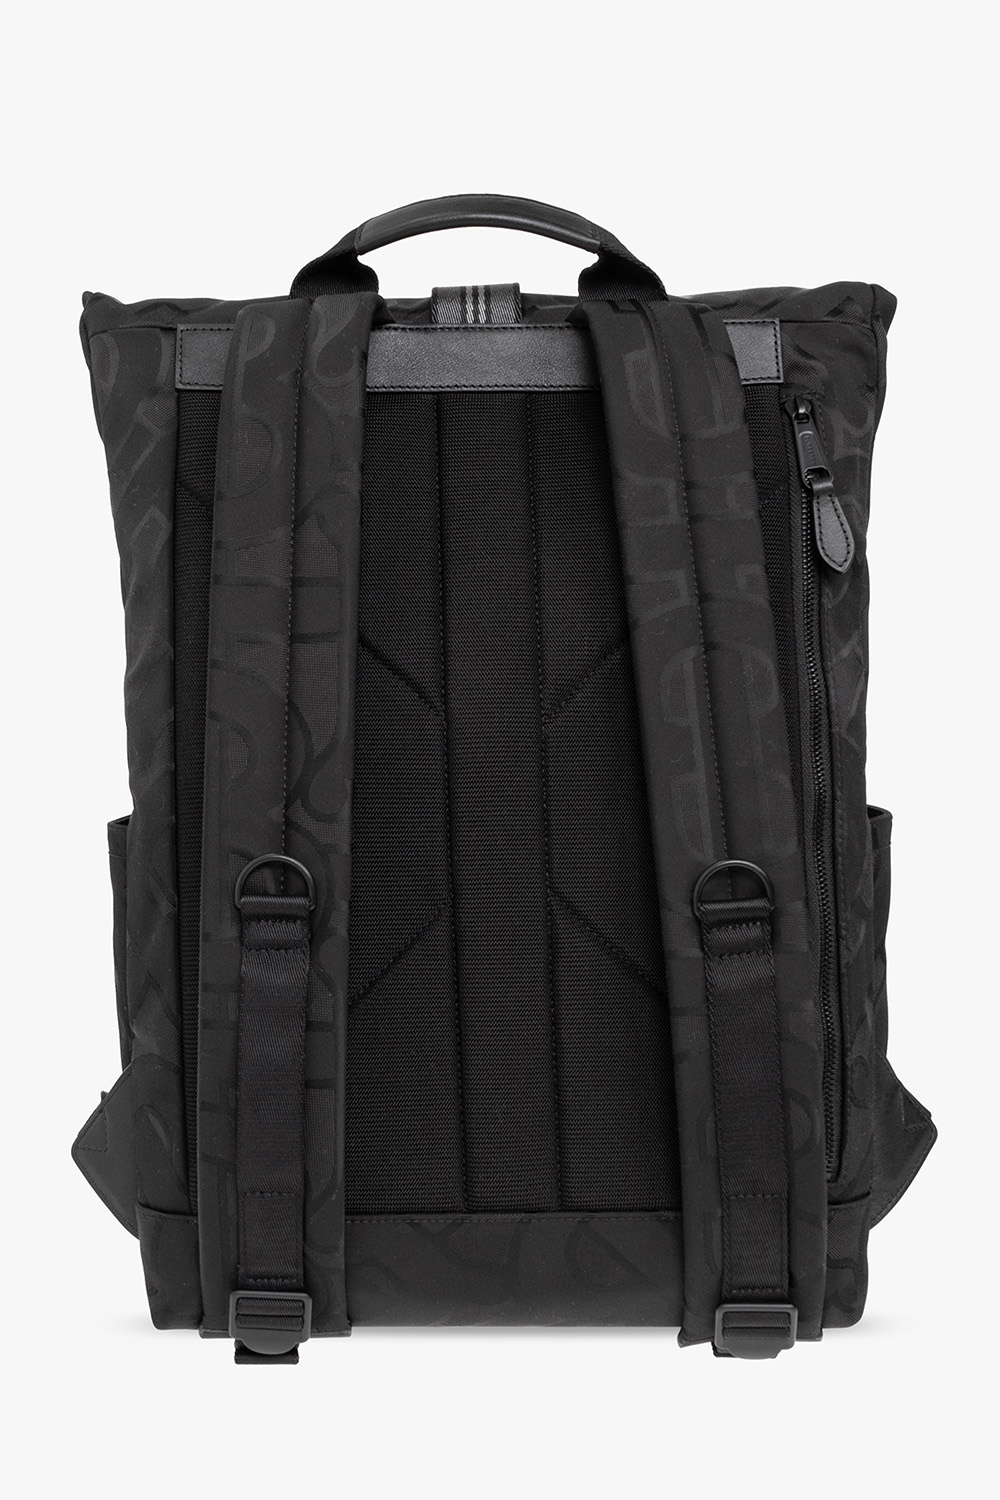 Burberry ‘Orville’ backpack